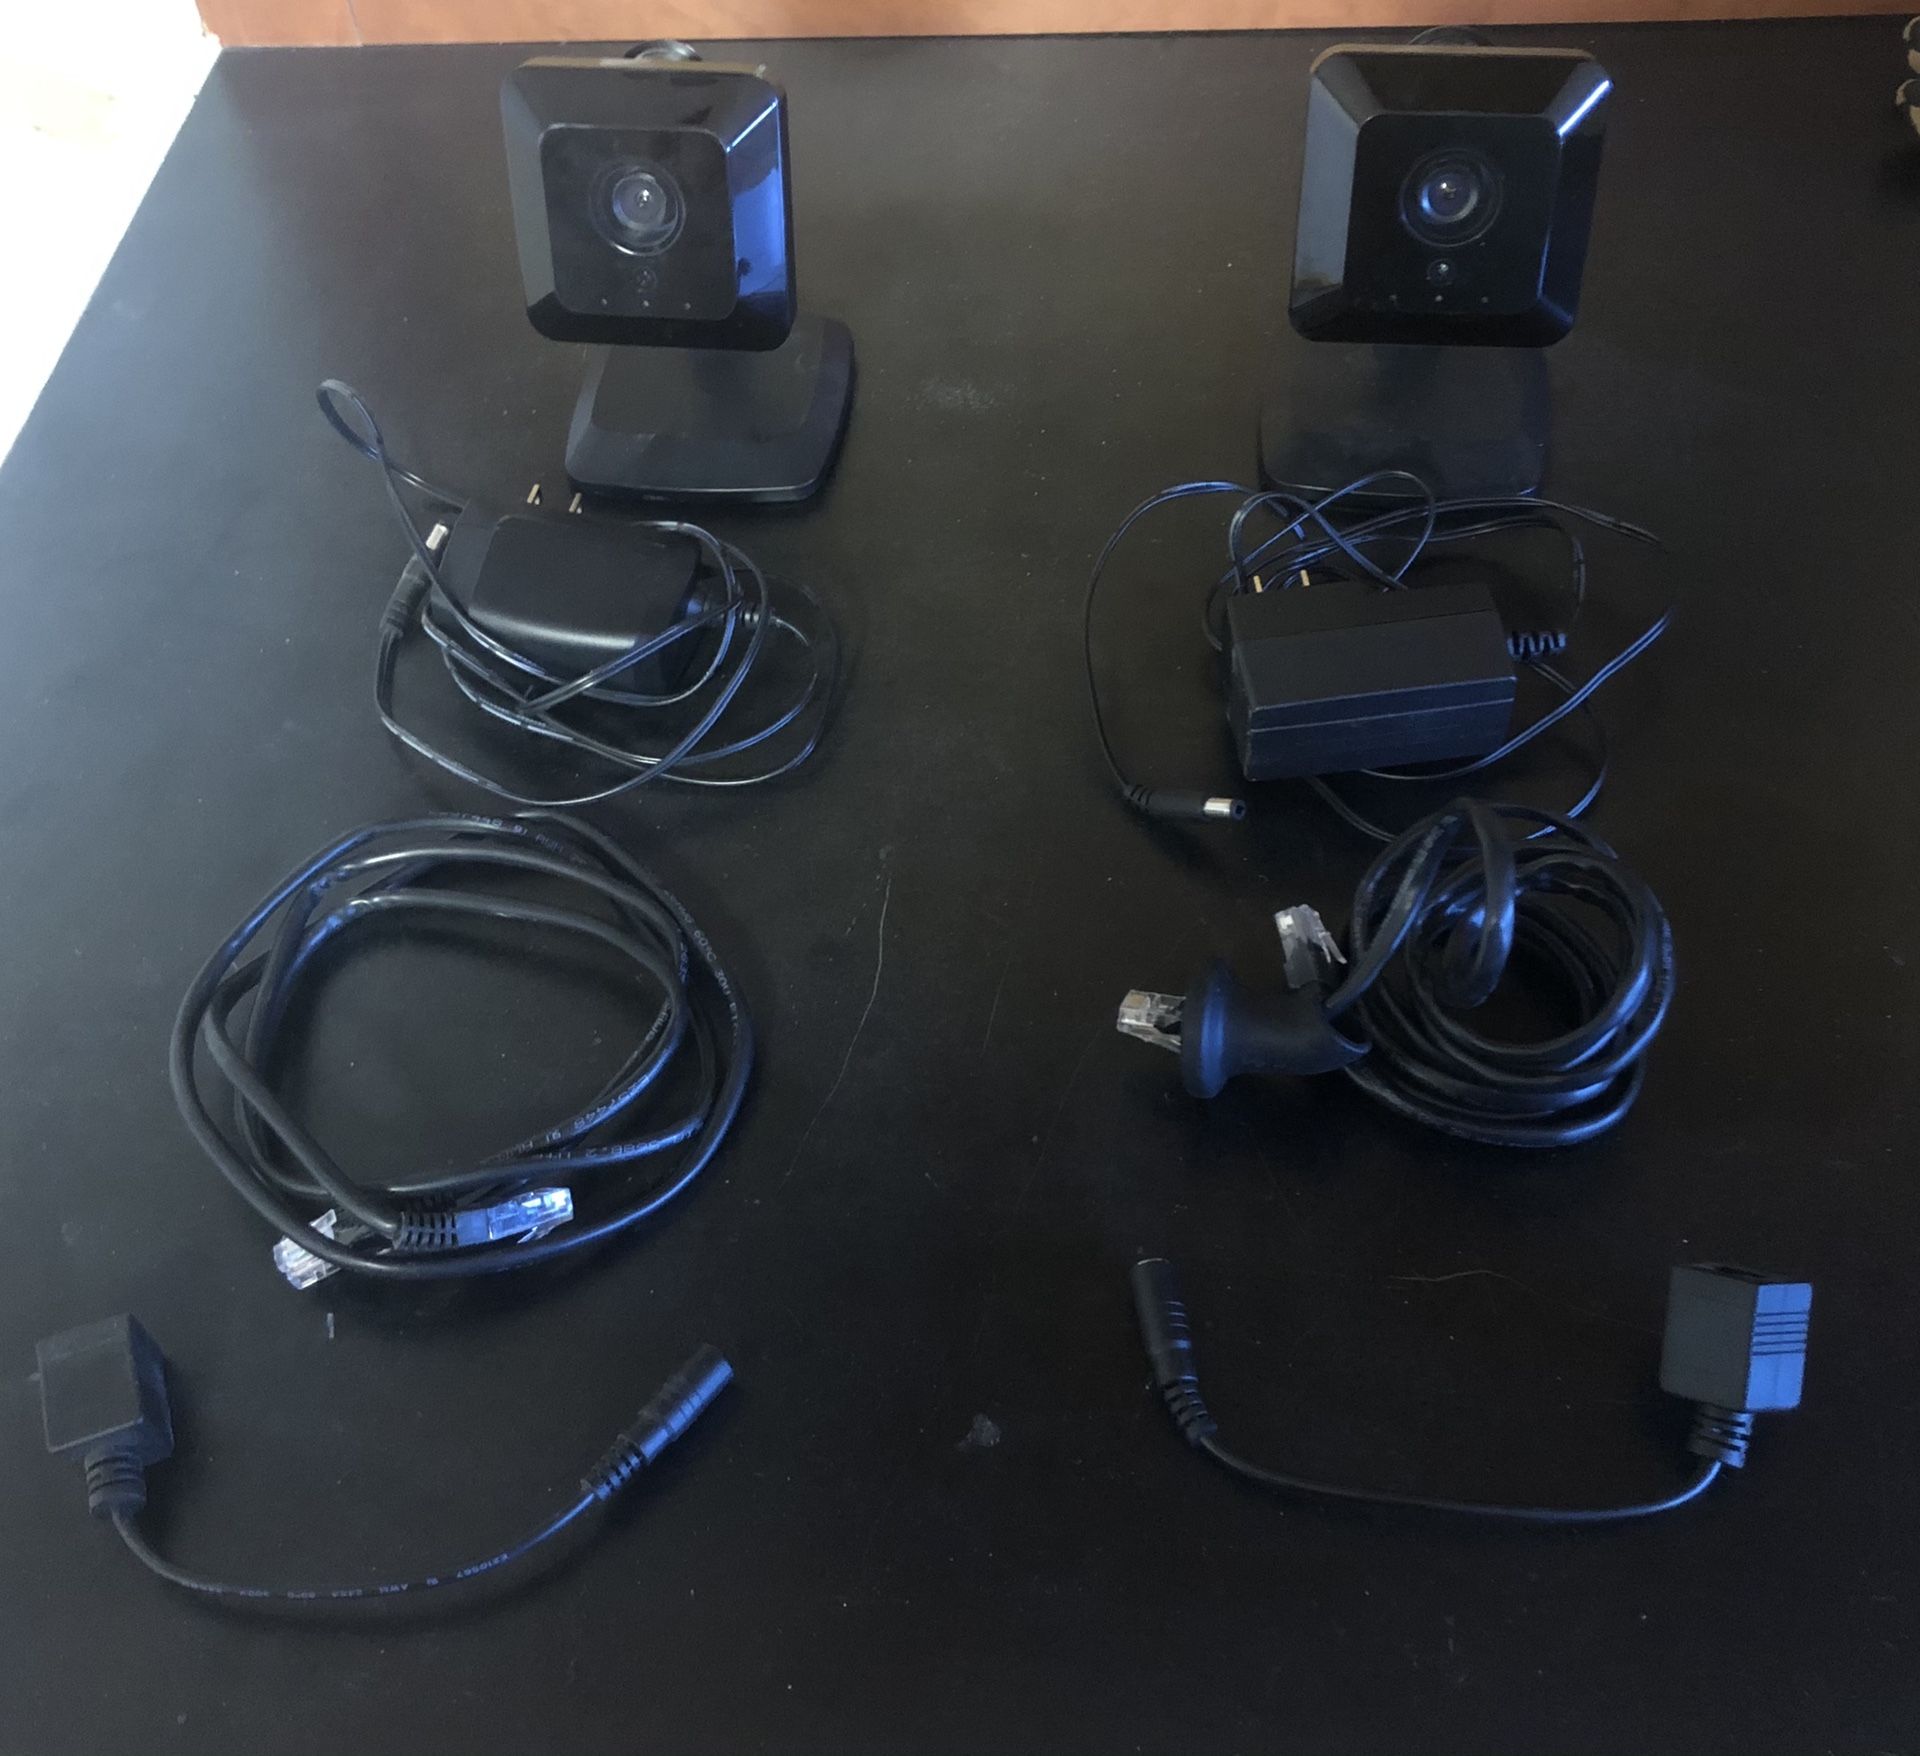 HD Wireless Cameras (x2)